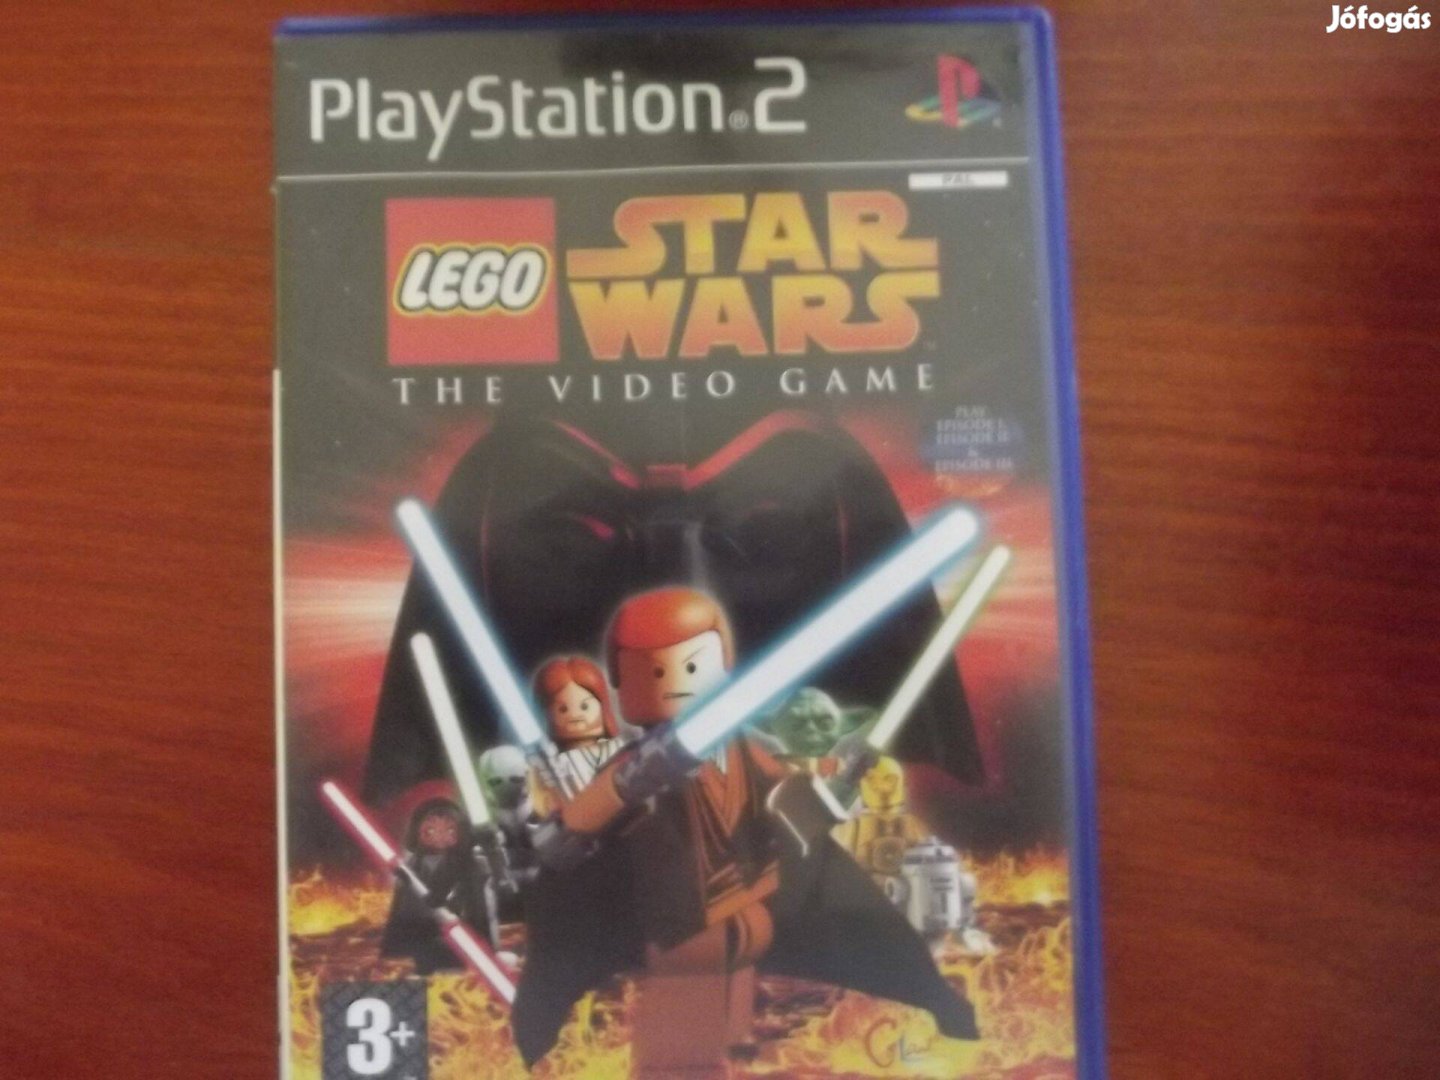 Ps2-57 Ps2 Eredeti Játék : Lego Star Wars The Video Game